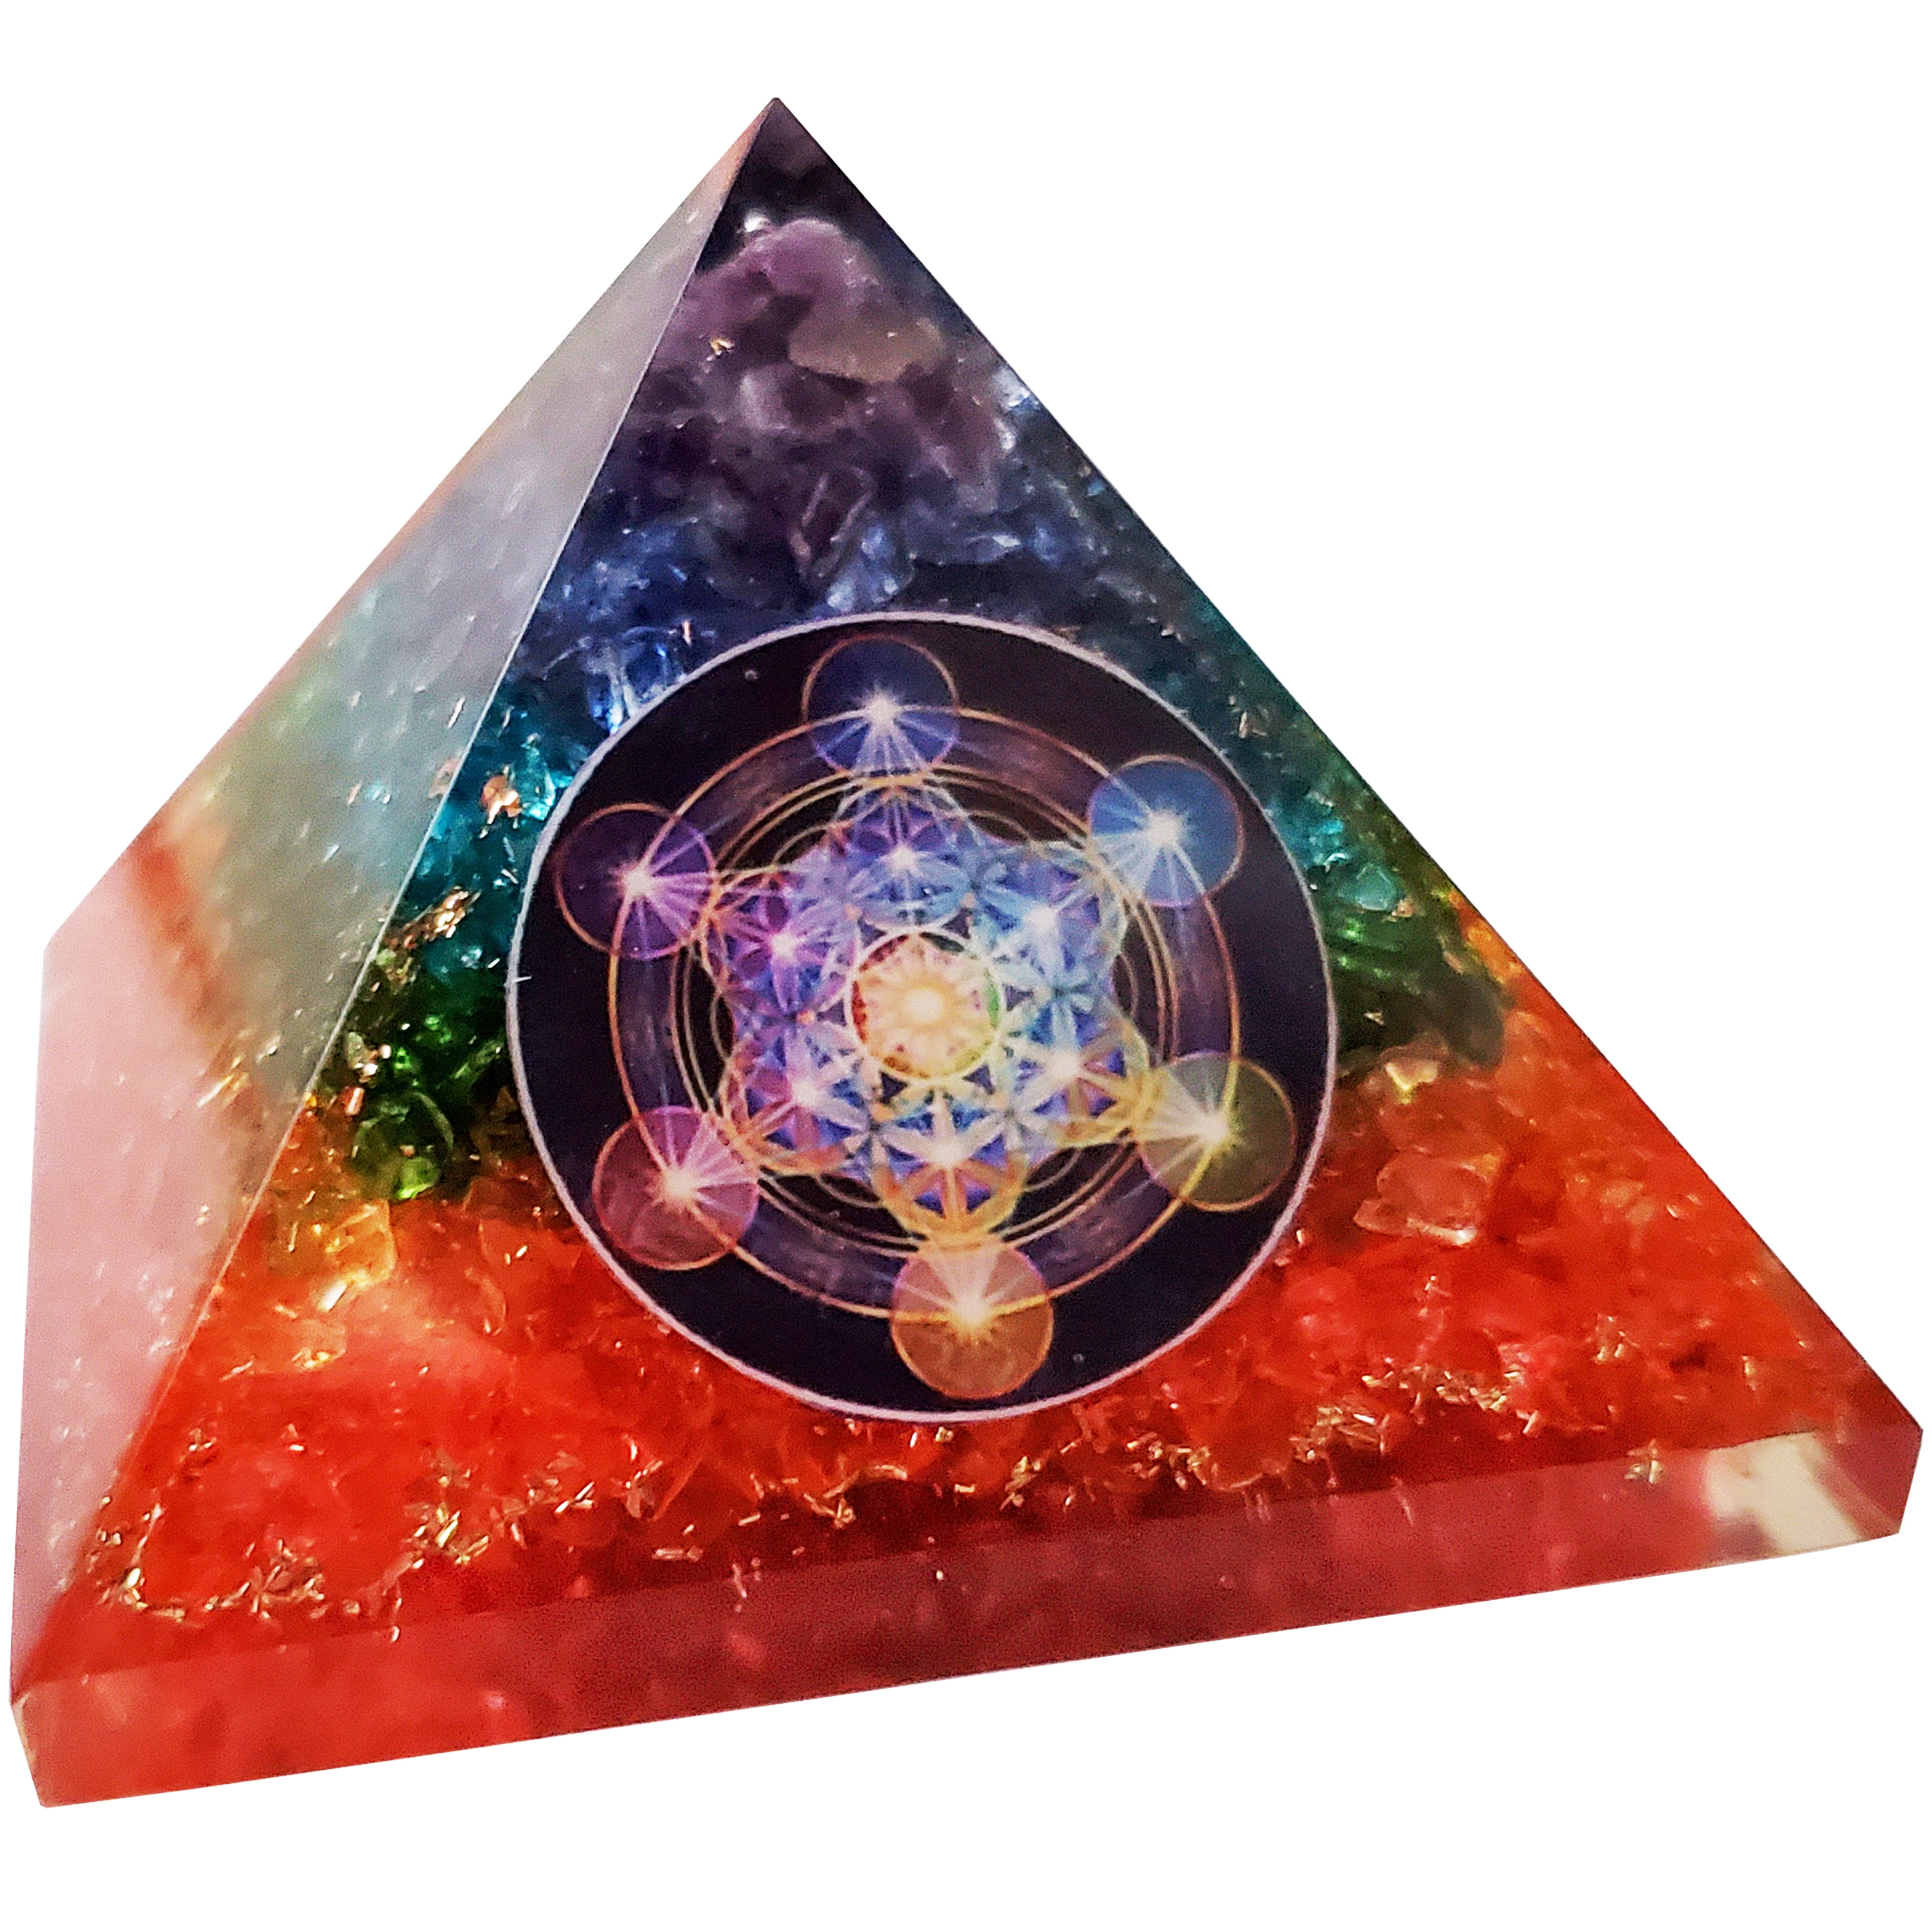 1 Inch FASHIONZAADI Seven Chakra Onyx Orgone Pyramid 7 Pcs Set for Crystal Energy Generator Chakras Balancing EMF Protection Gemstone Spiritual Reiki Healing Meditation Size 